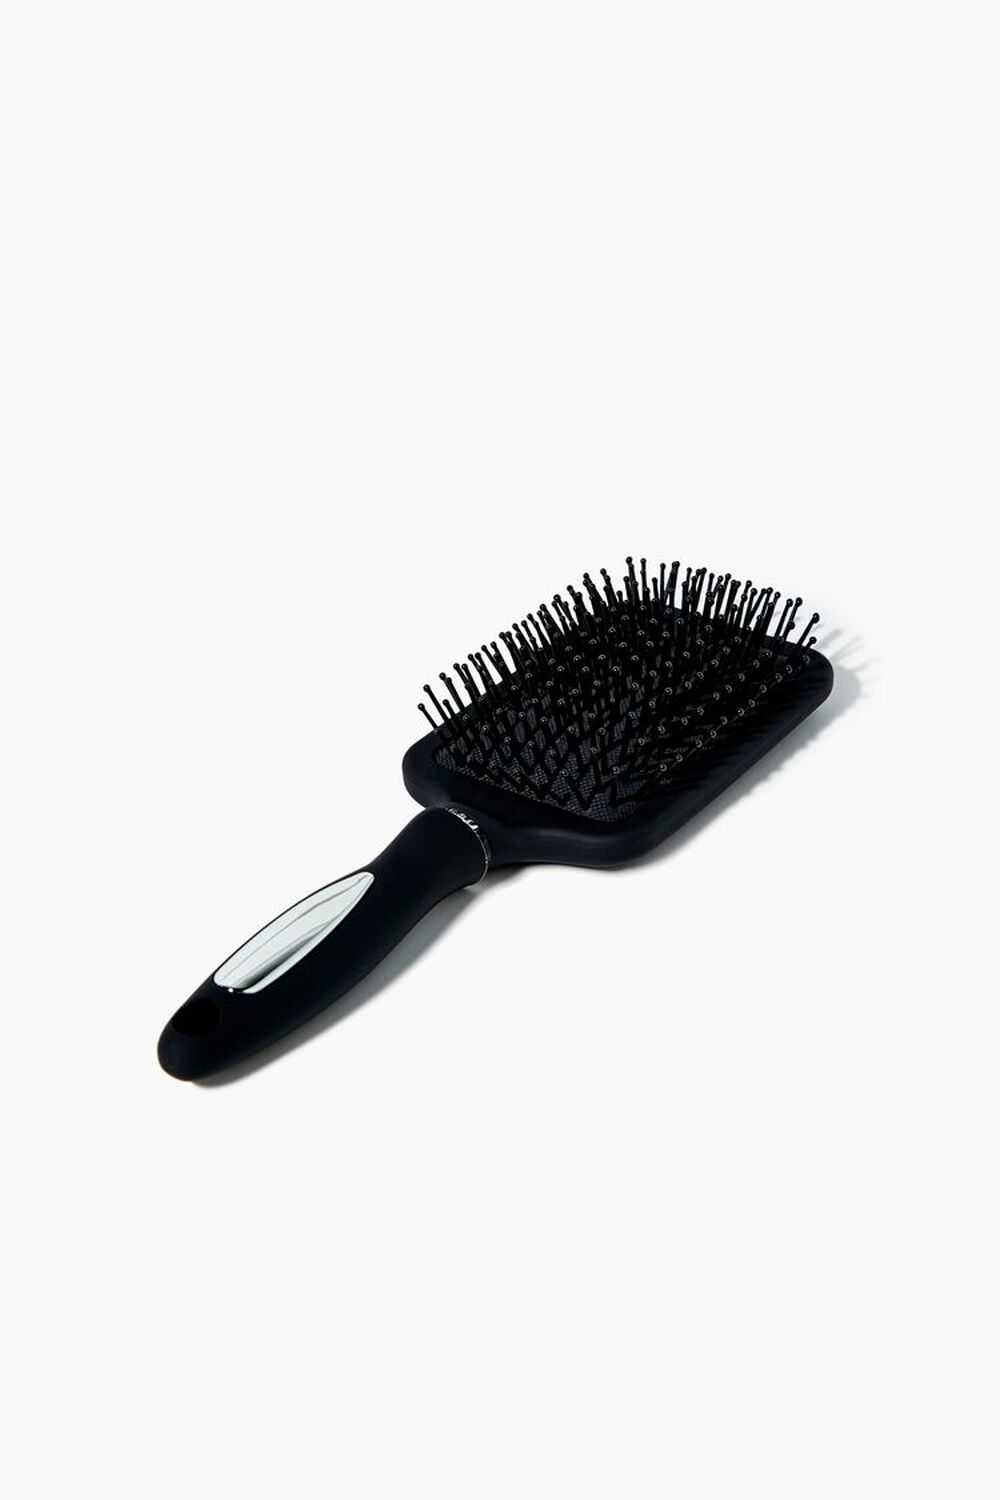 Ball-Tip Hair Brush, image 1